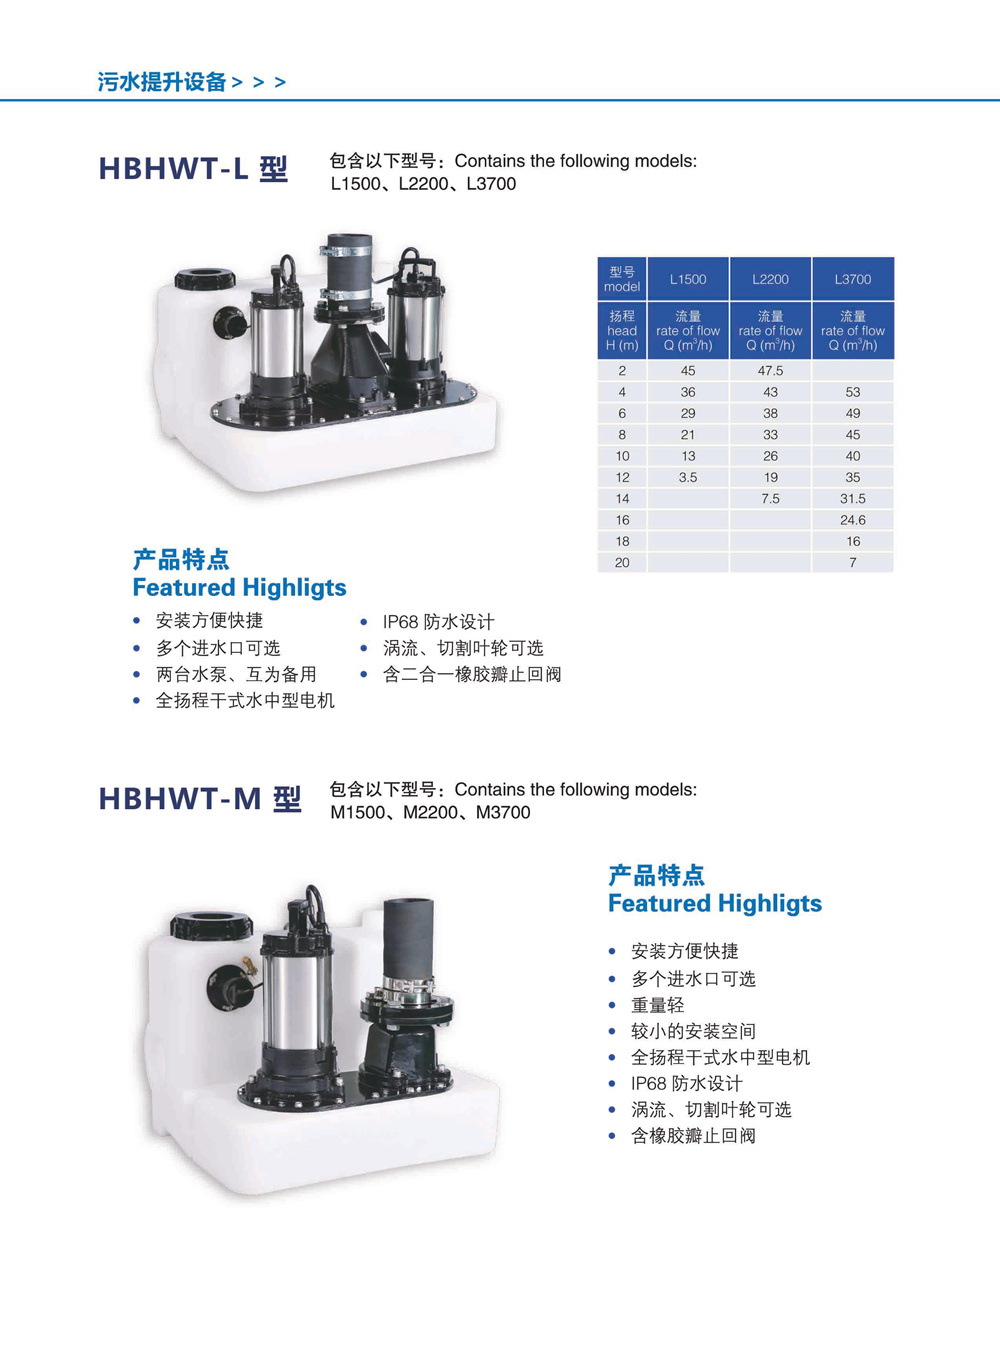 HBHWT-L型 小型污水提升设备(图1)